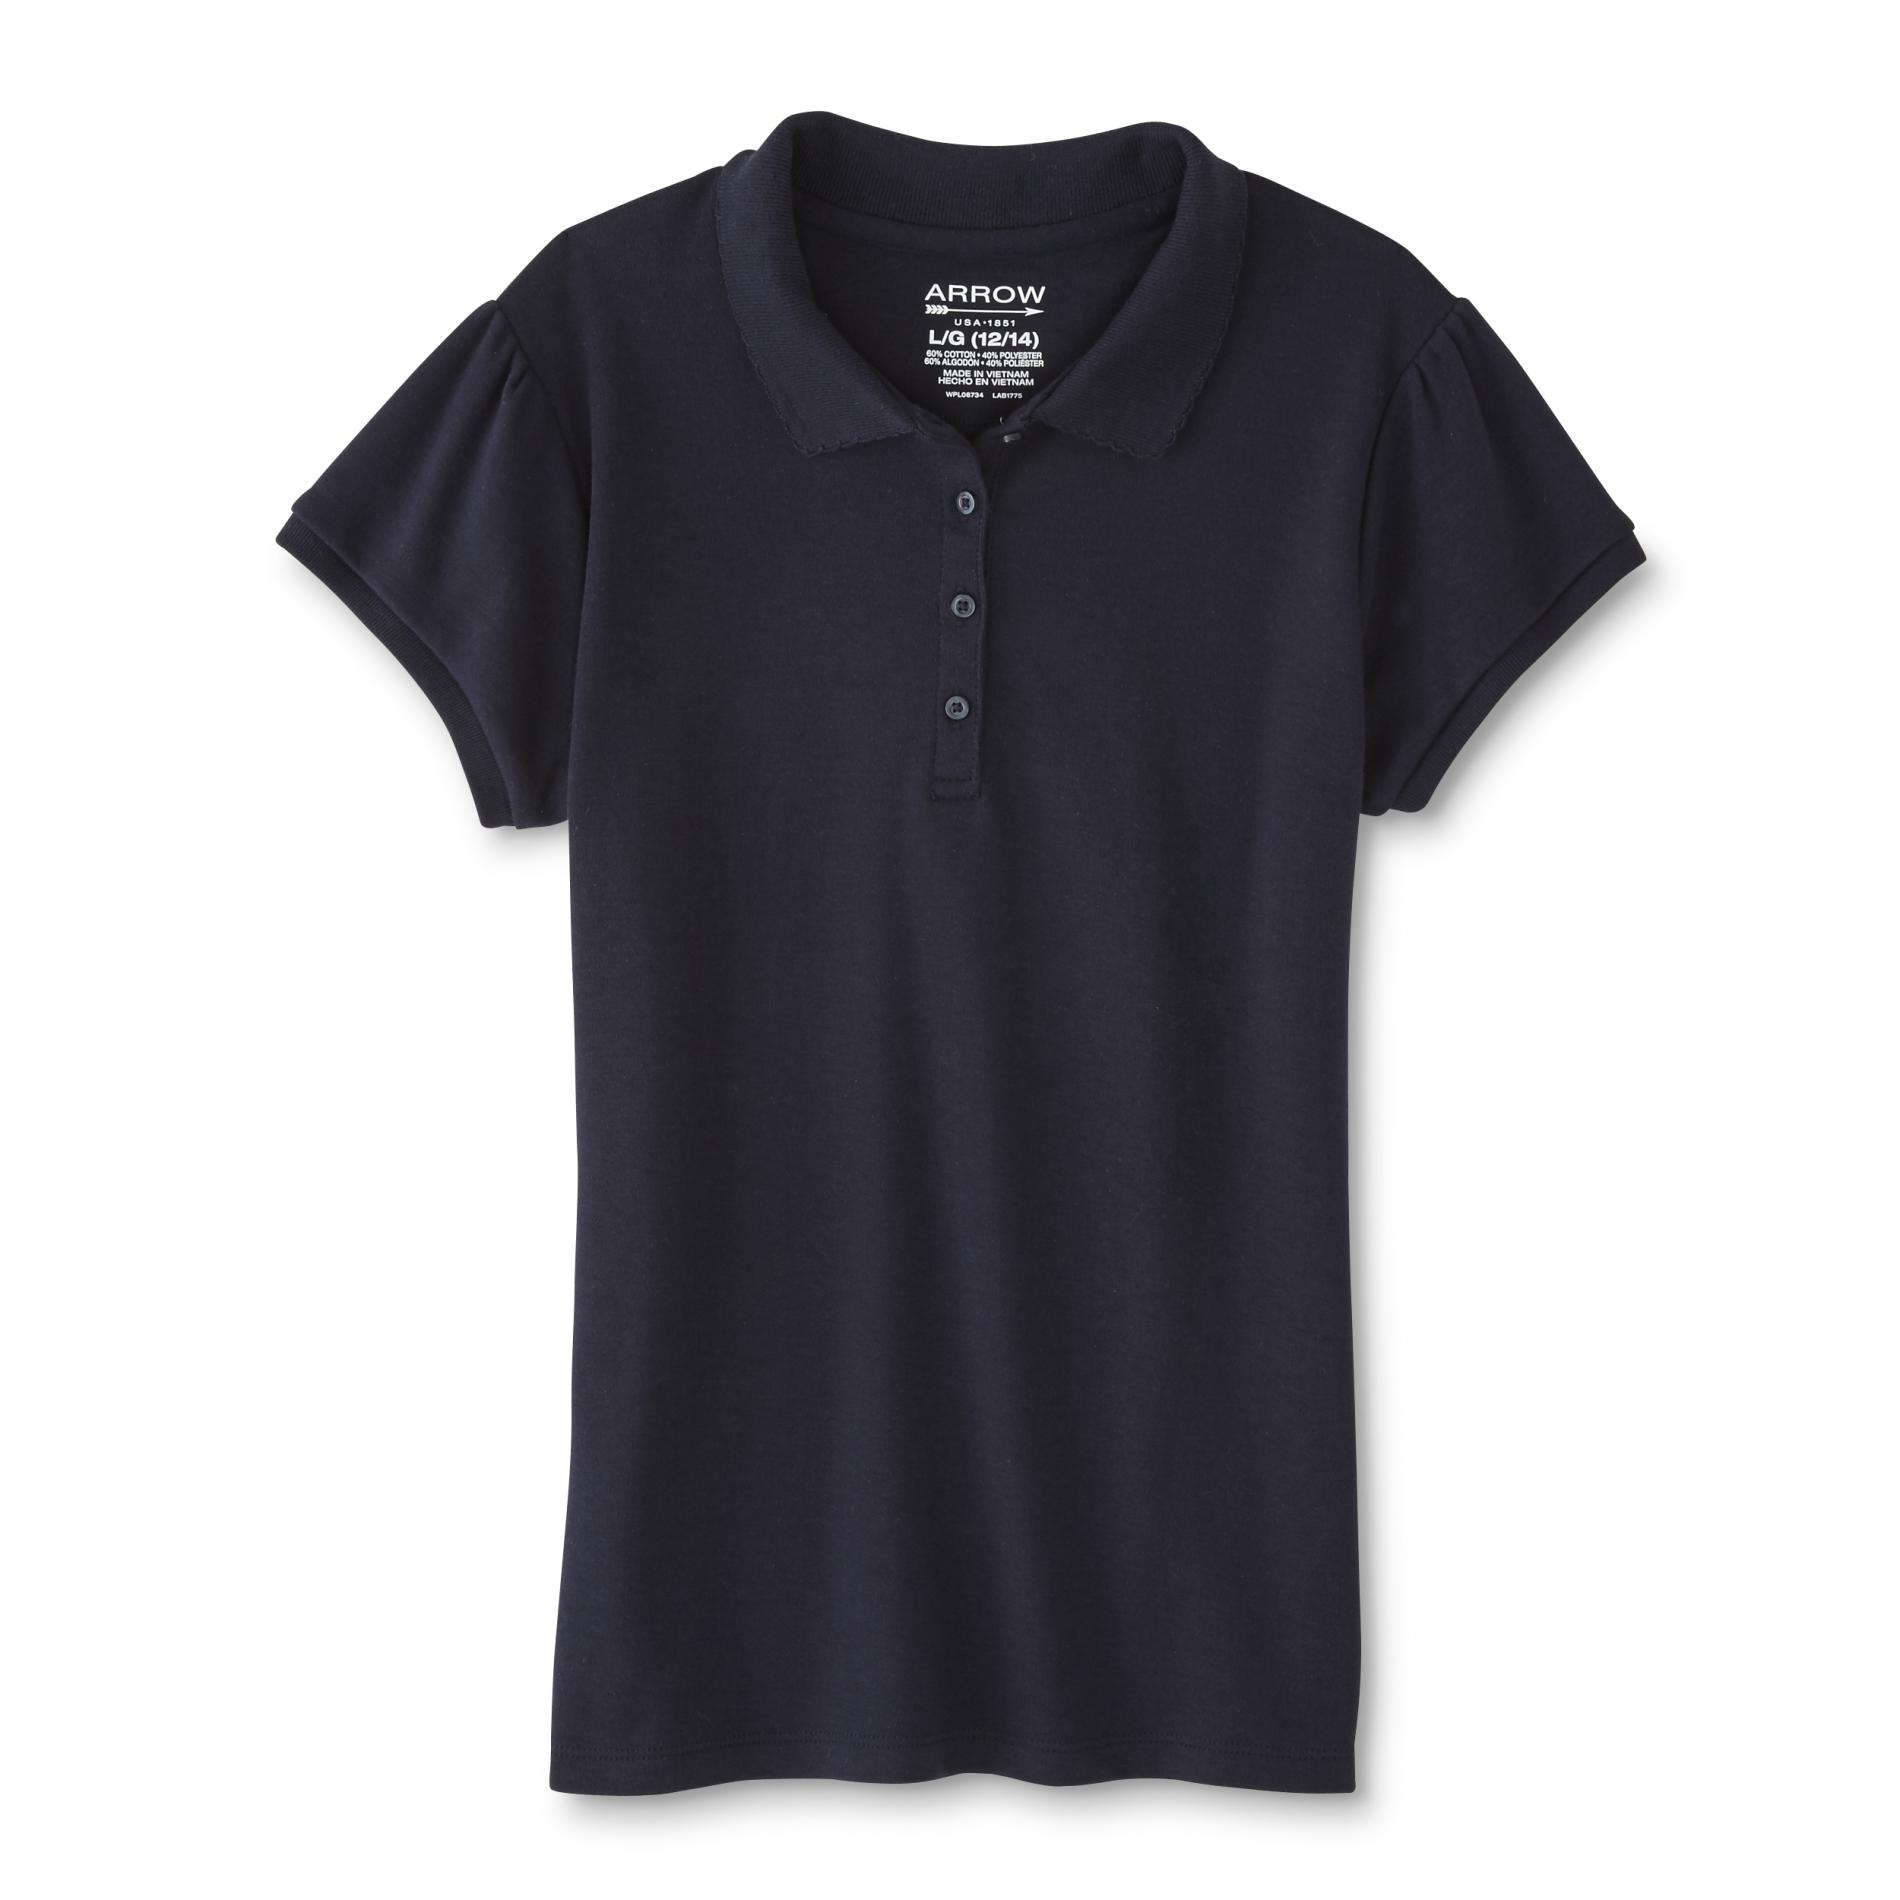 Arrow Girls' Polo Shirt